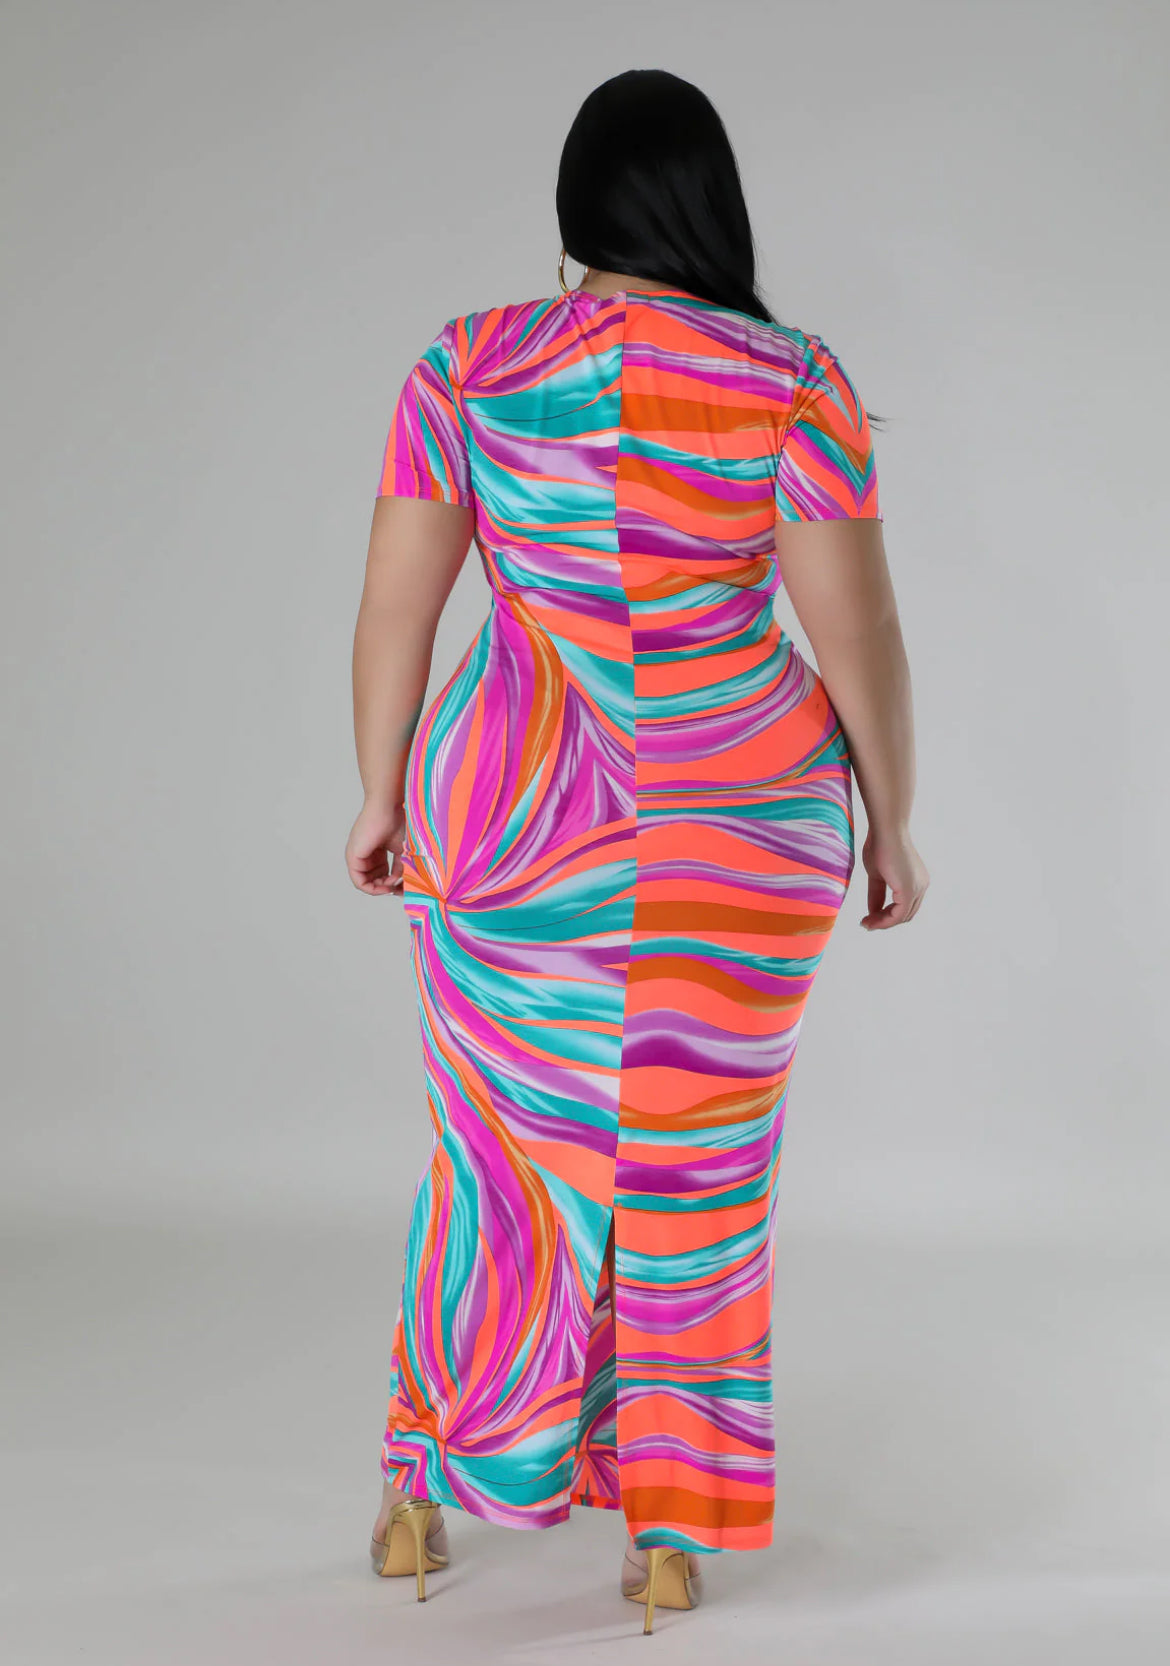 Colorful dress